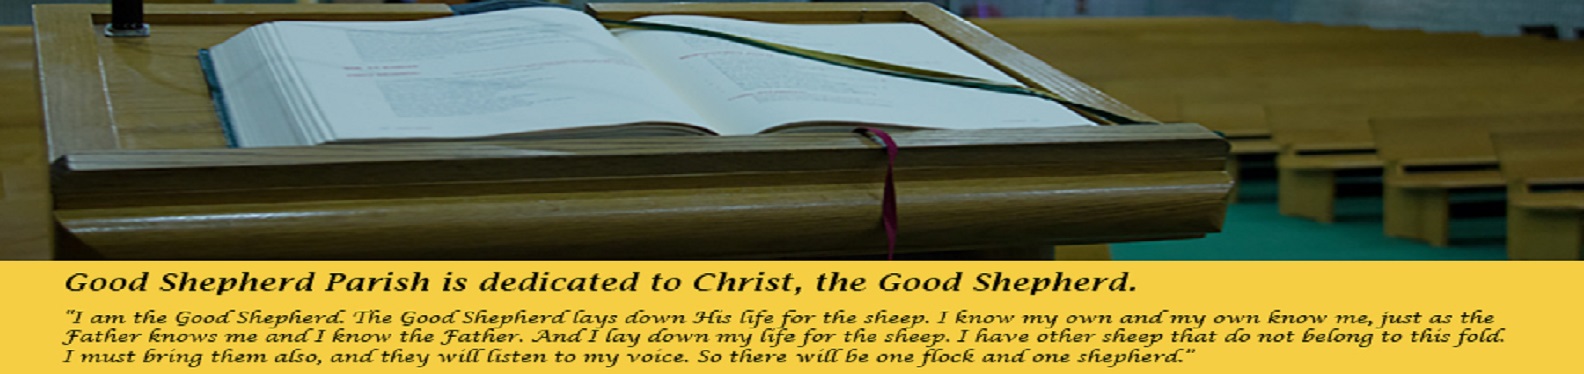 Banner I am The Good Shepherd (liturgy)